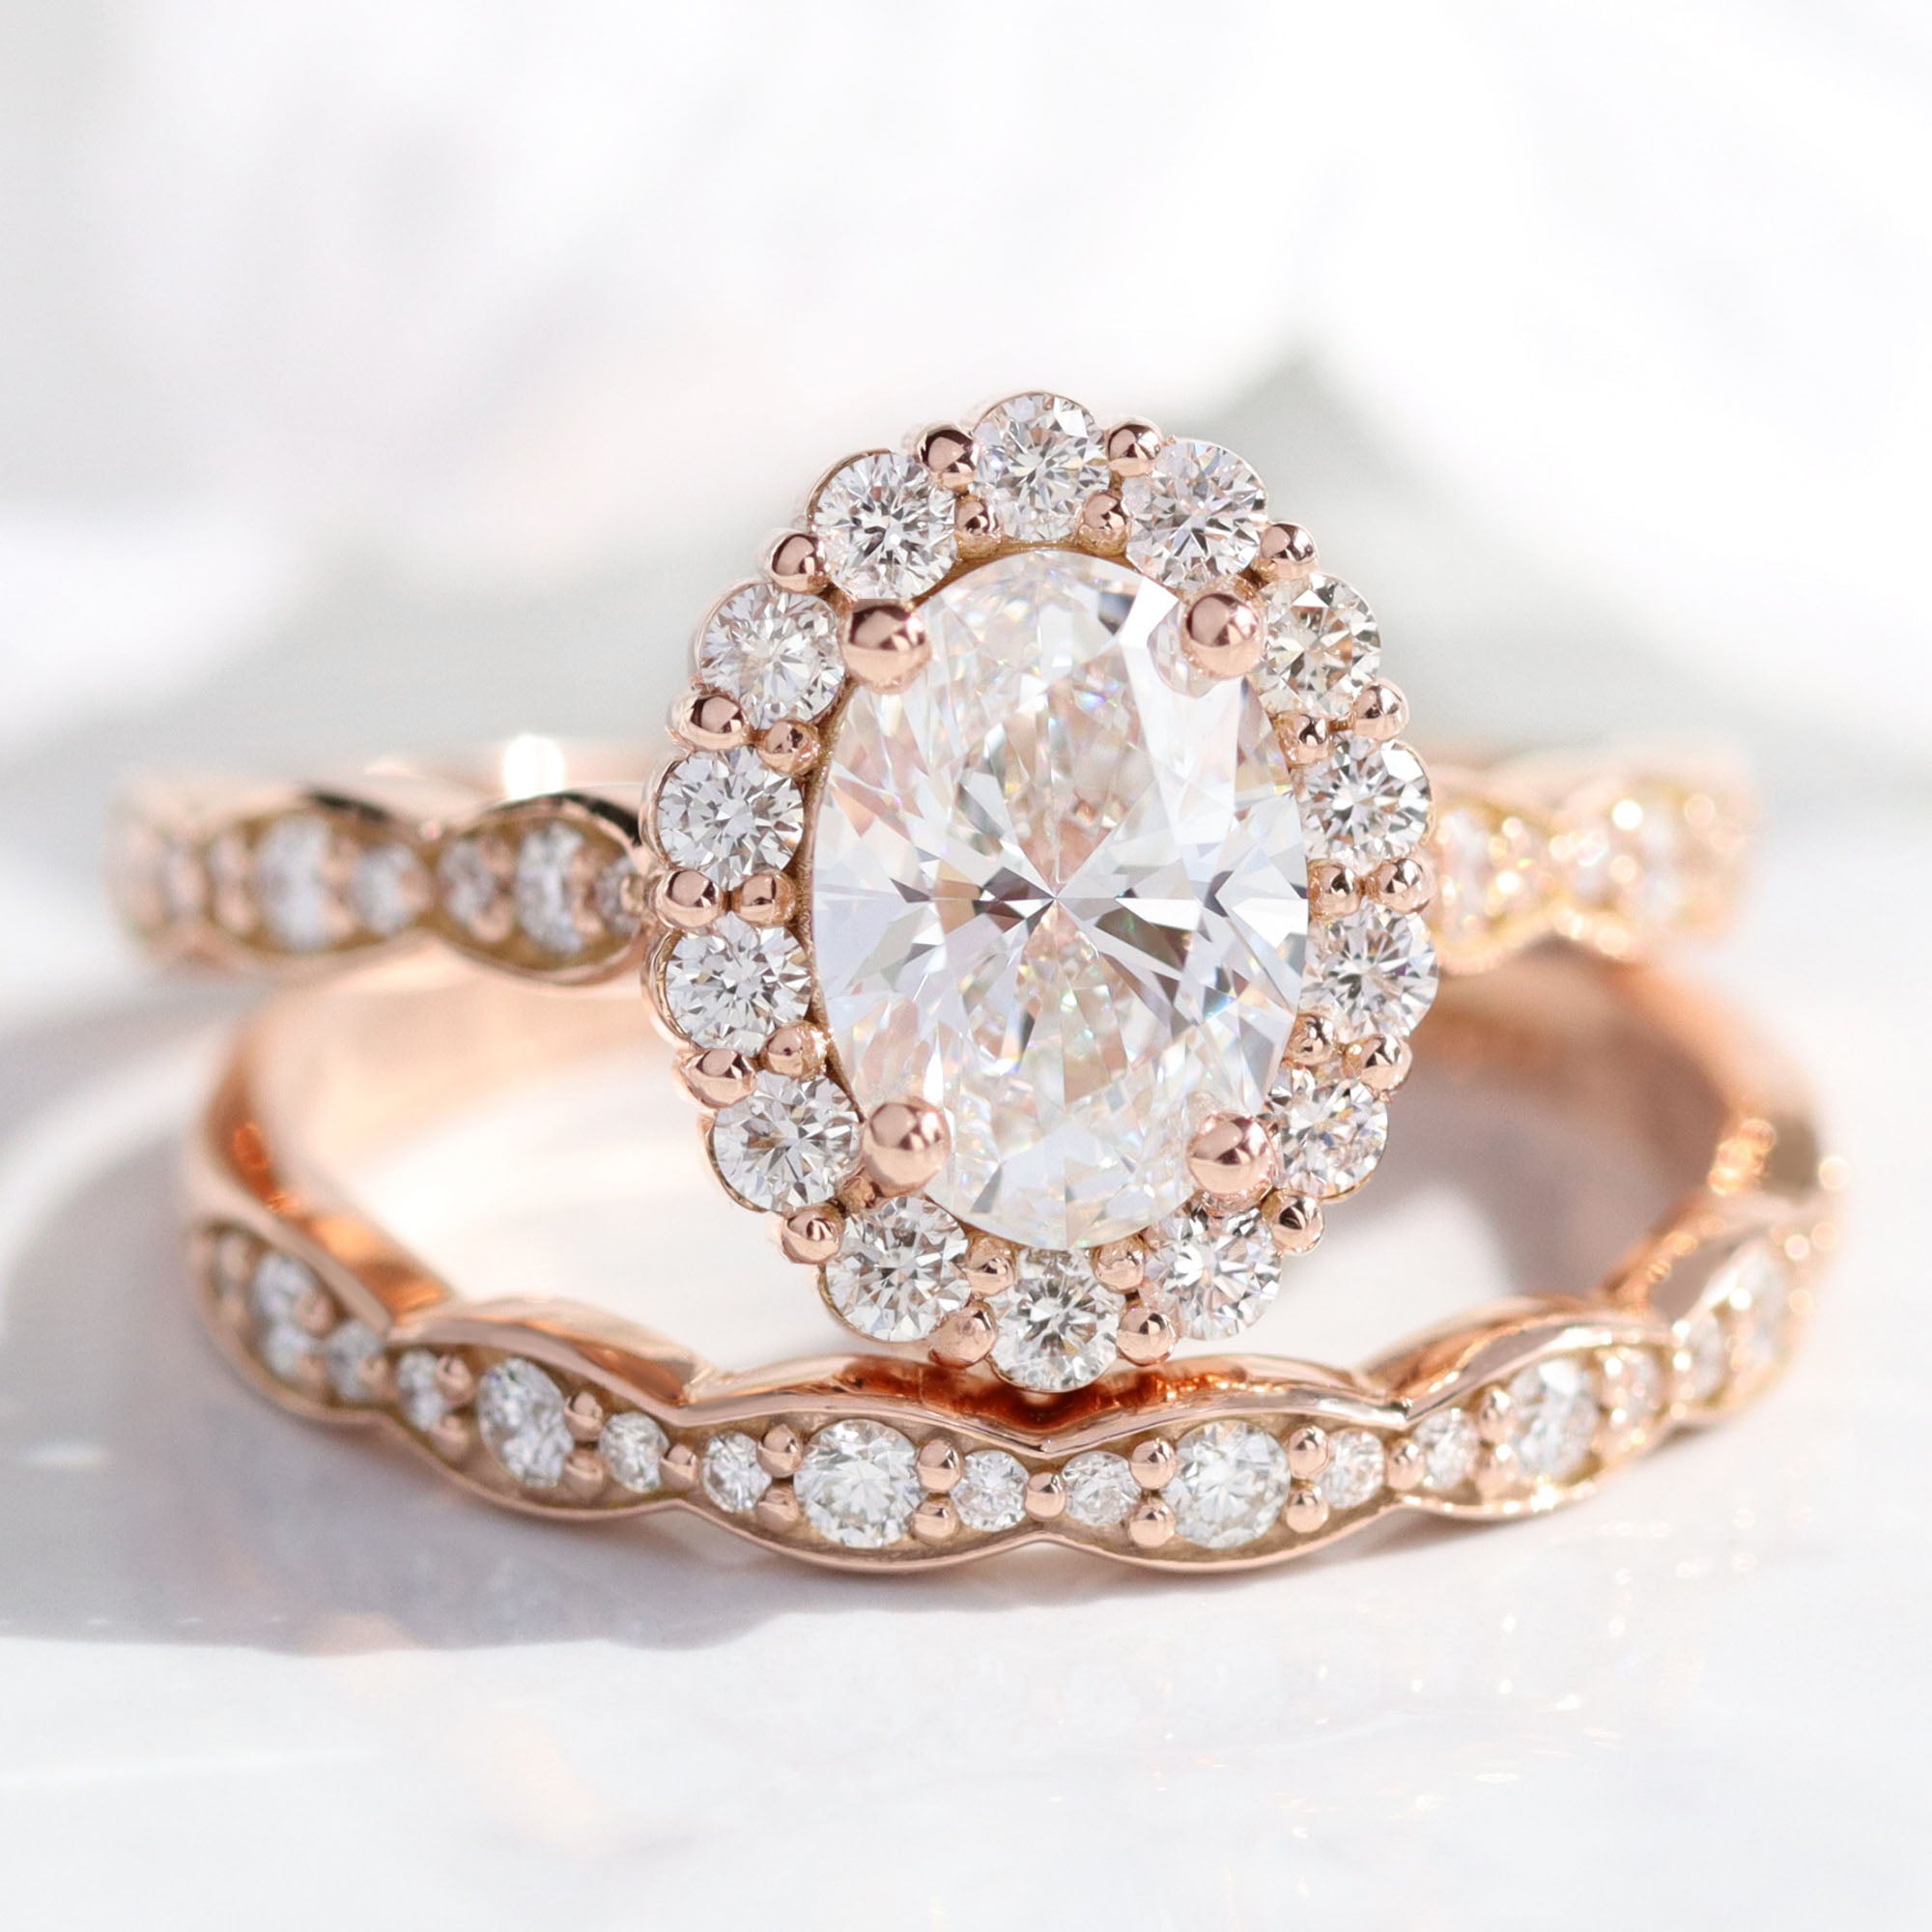 lab diamond ring stack rose gold halo diamond engagement ring set La More Design Jewelry